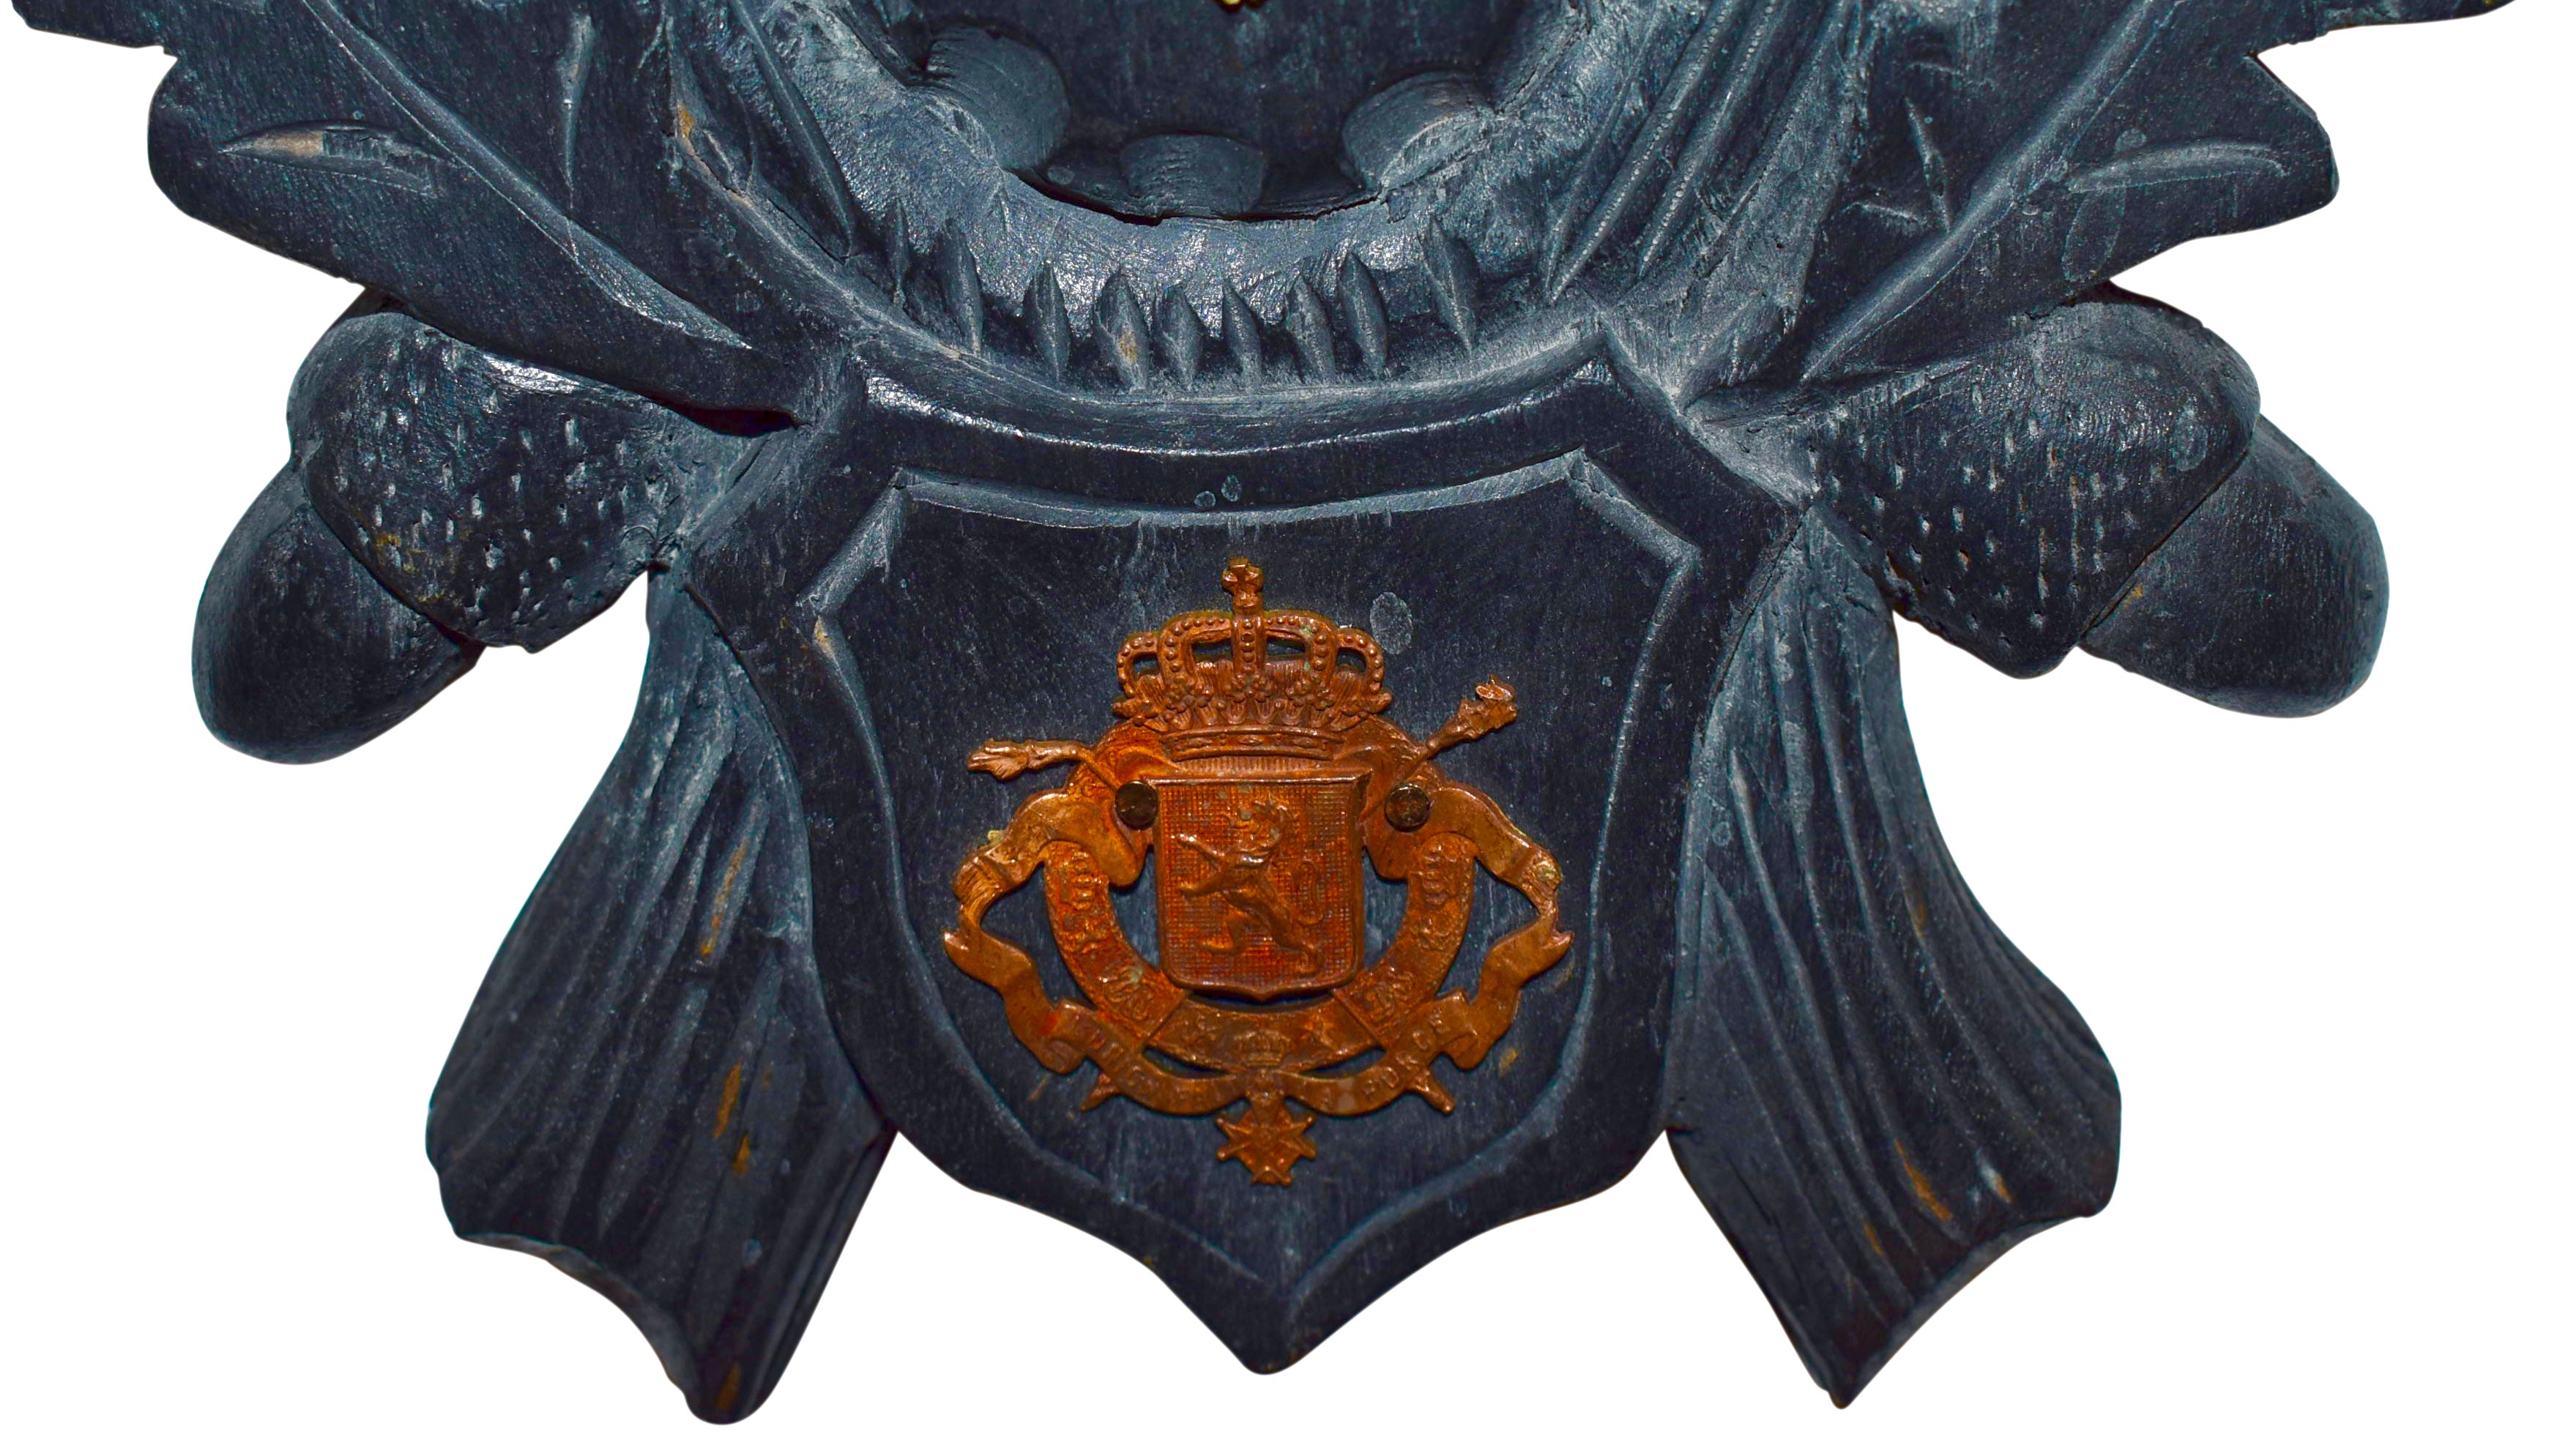 Roe Deer Trophy on Carved Plaque from King Leopold I of Belgium